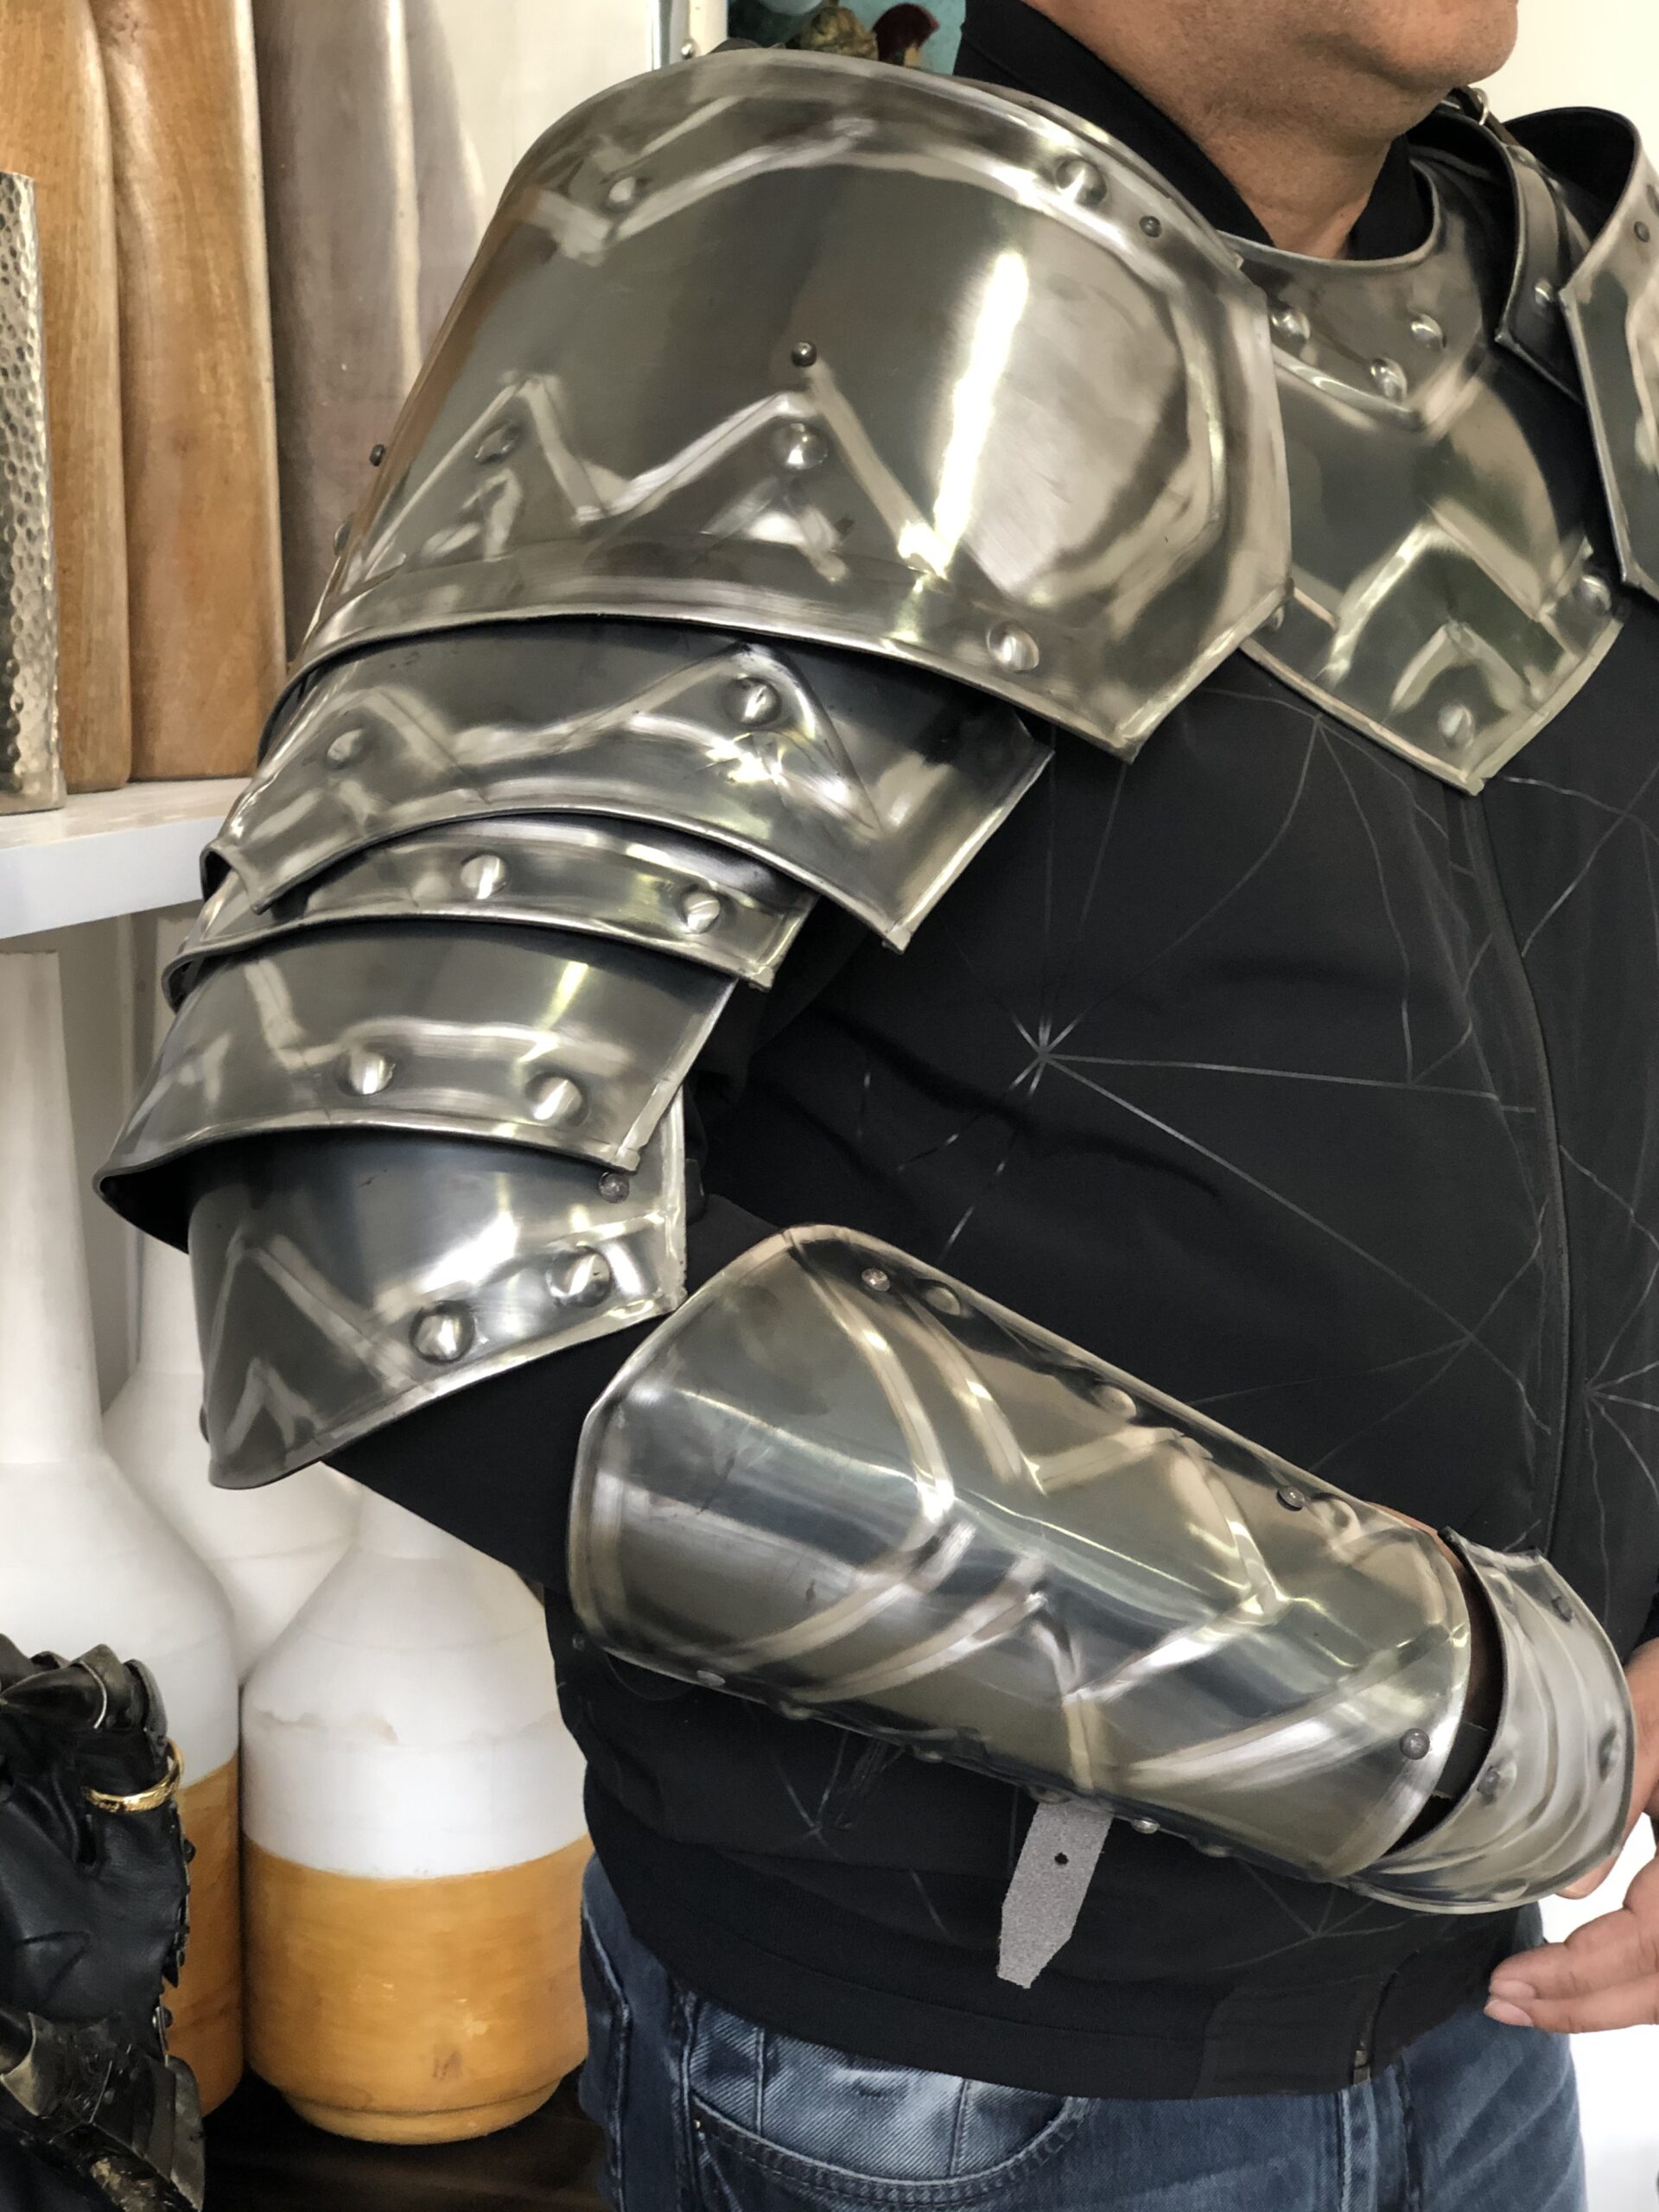 NauticalMart Medieval Knight Suit of Armor Combat Full Body Armour Wearable  Handicraft Replica